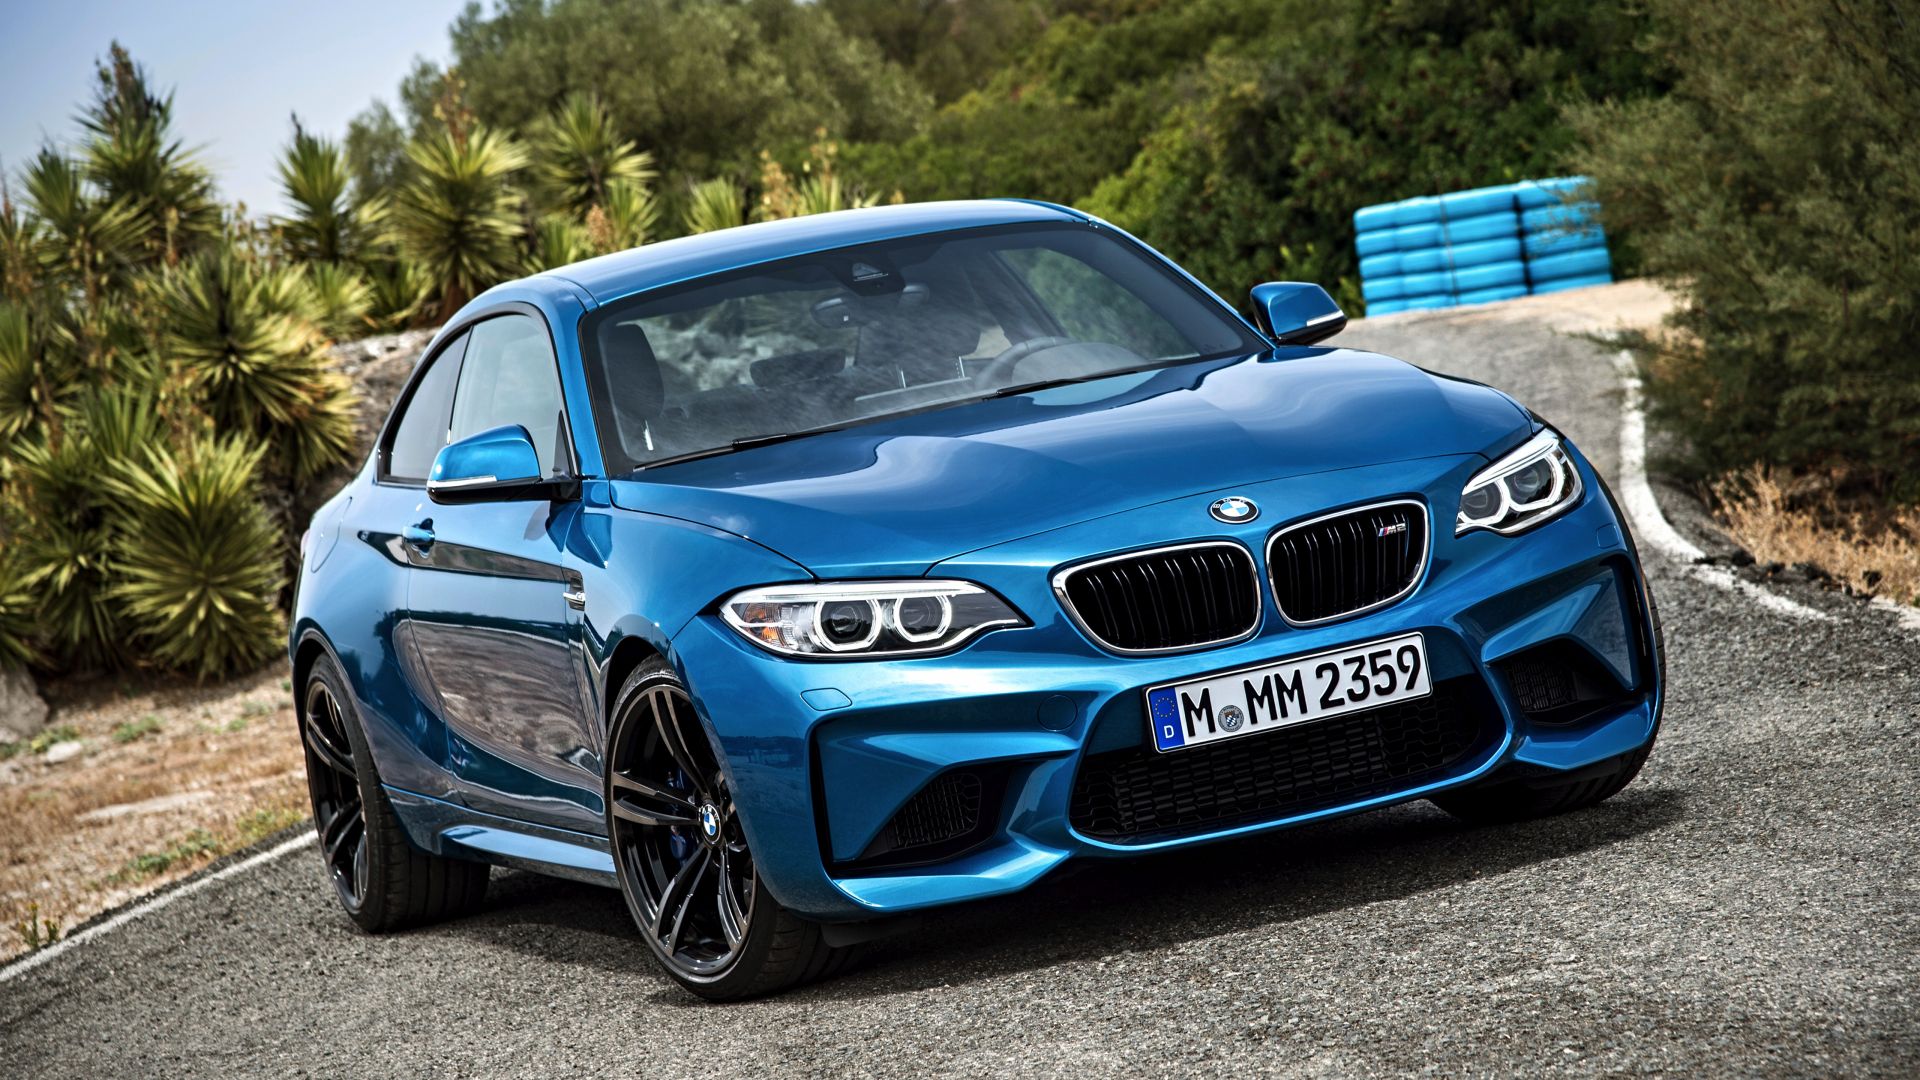 Wallpaper BMW M2, blue luxury car, front view